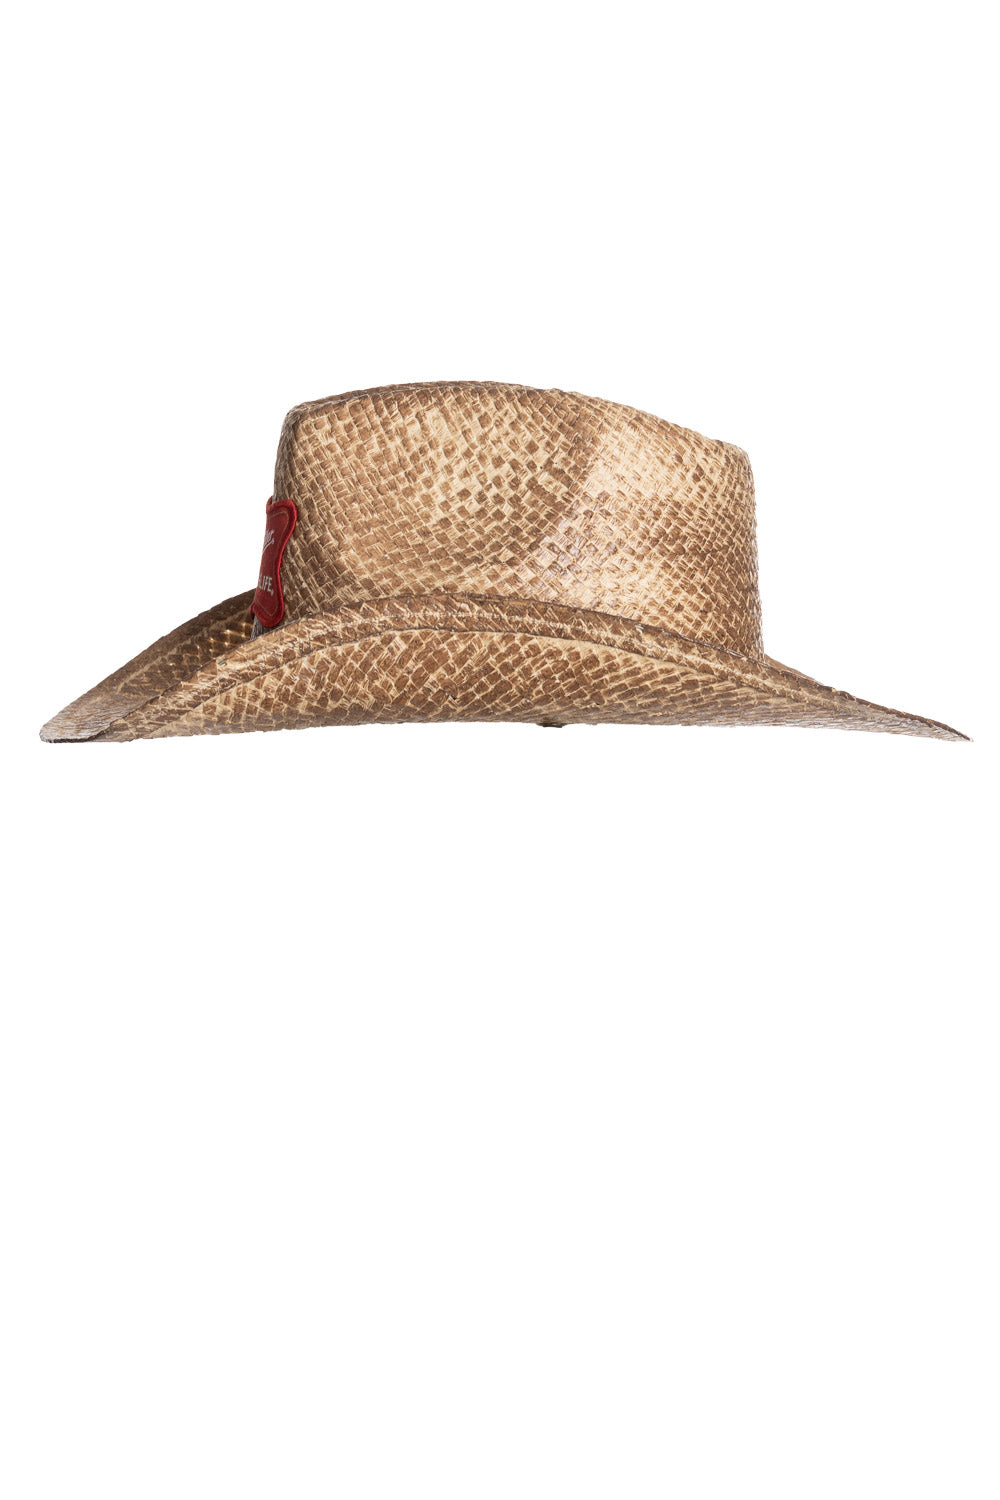 Miller High Life Straw Cowboy Hat